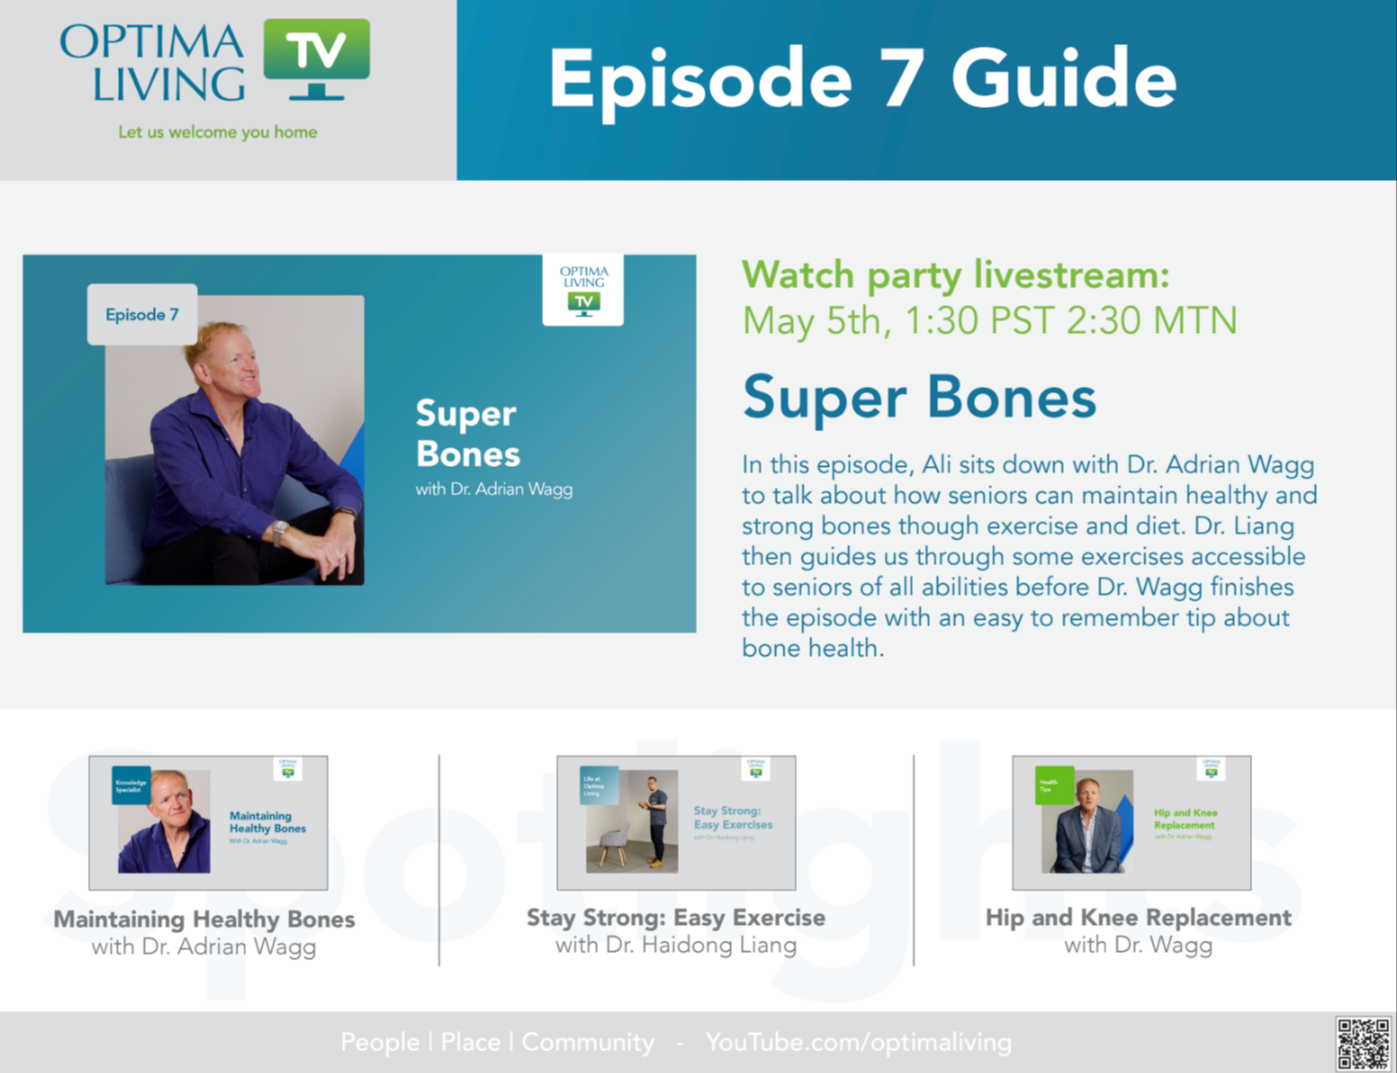 Optima Living TV episode guide for episode 7